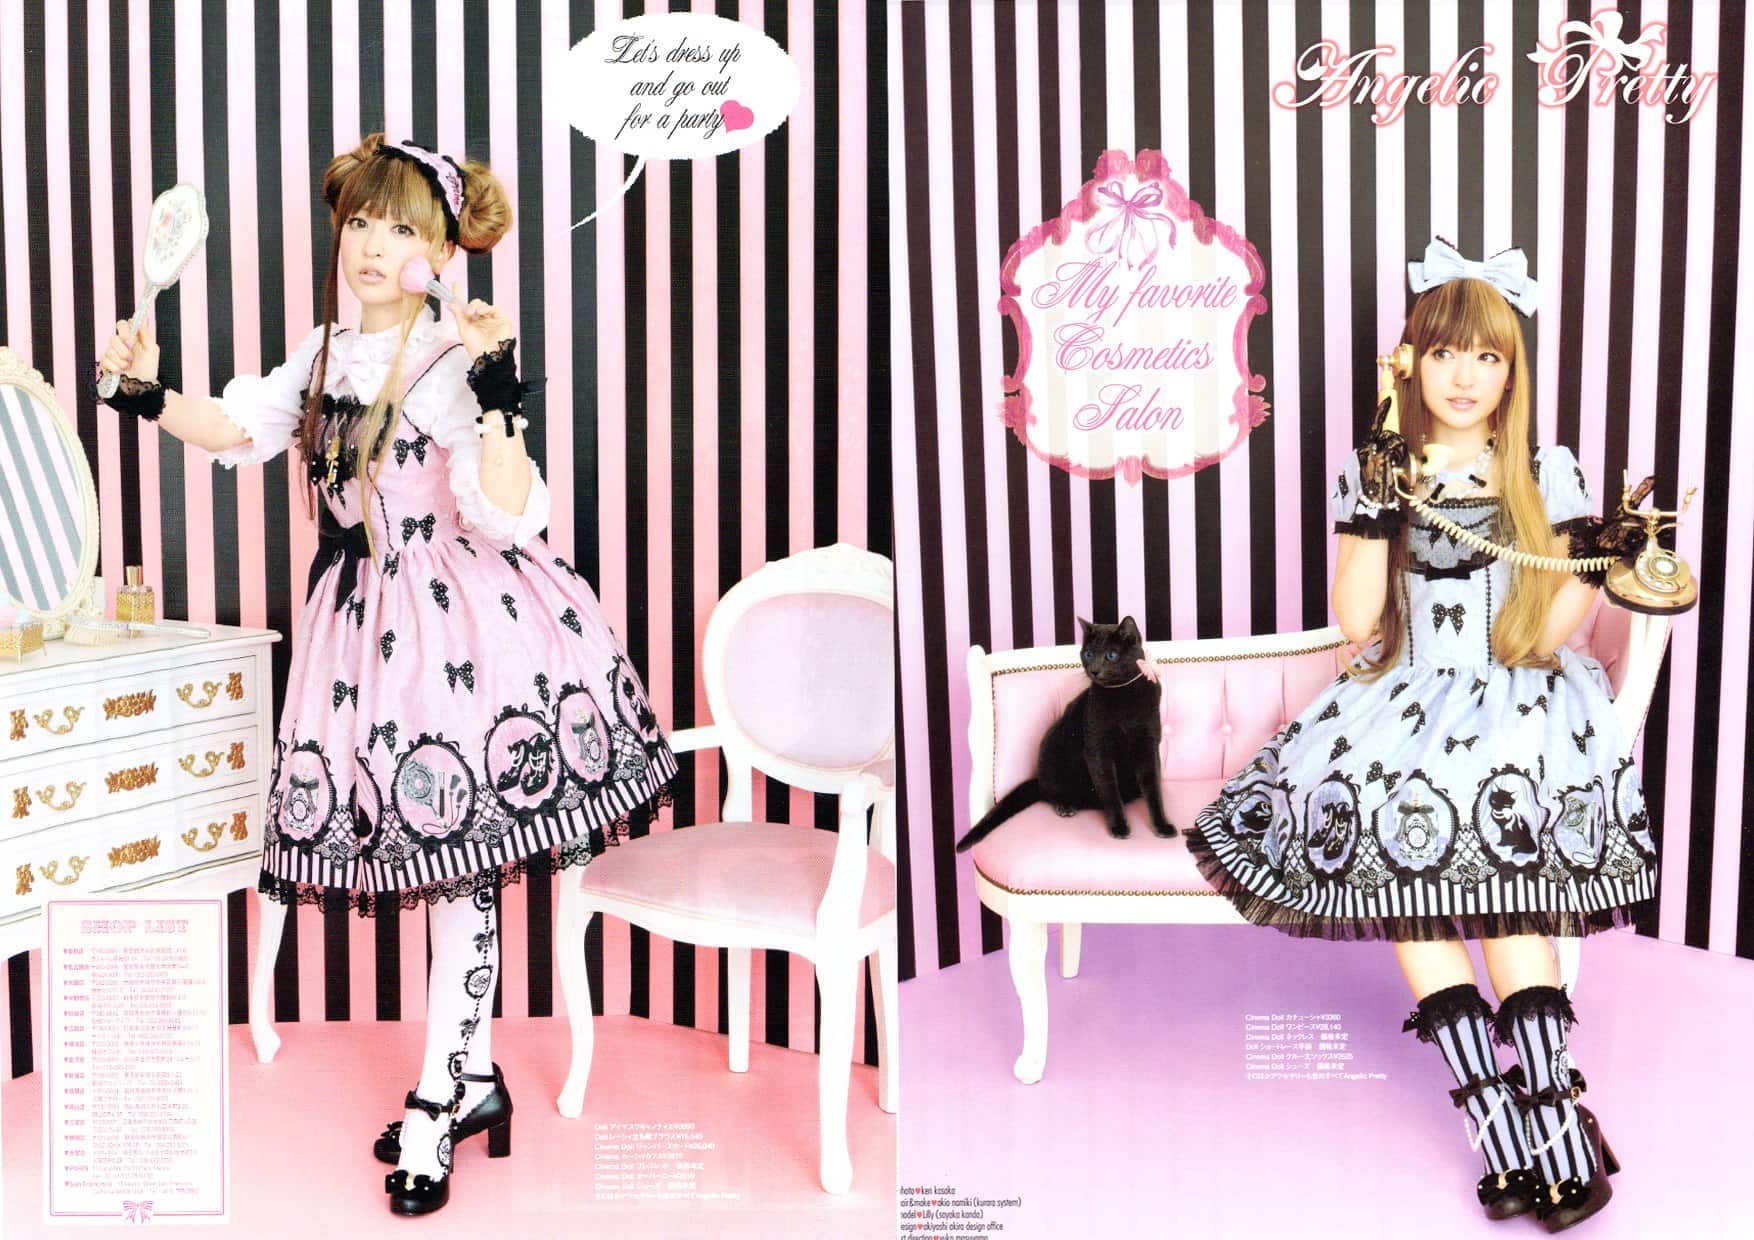 Angelic Pretty Cinema Doll ad modeled by Sayaka Kanda